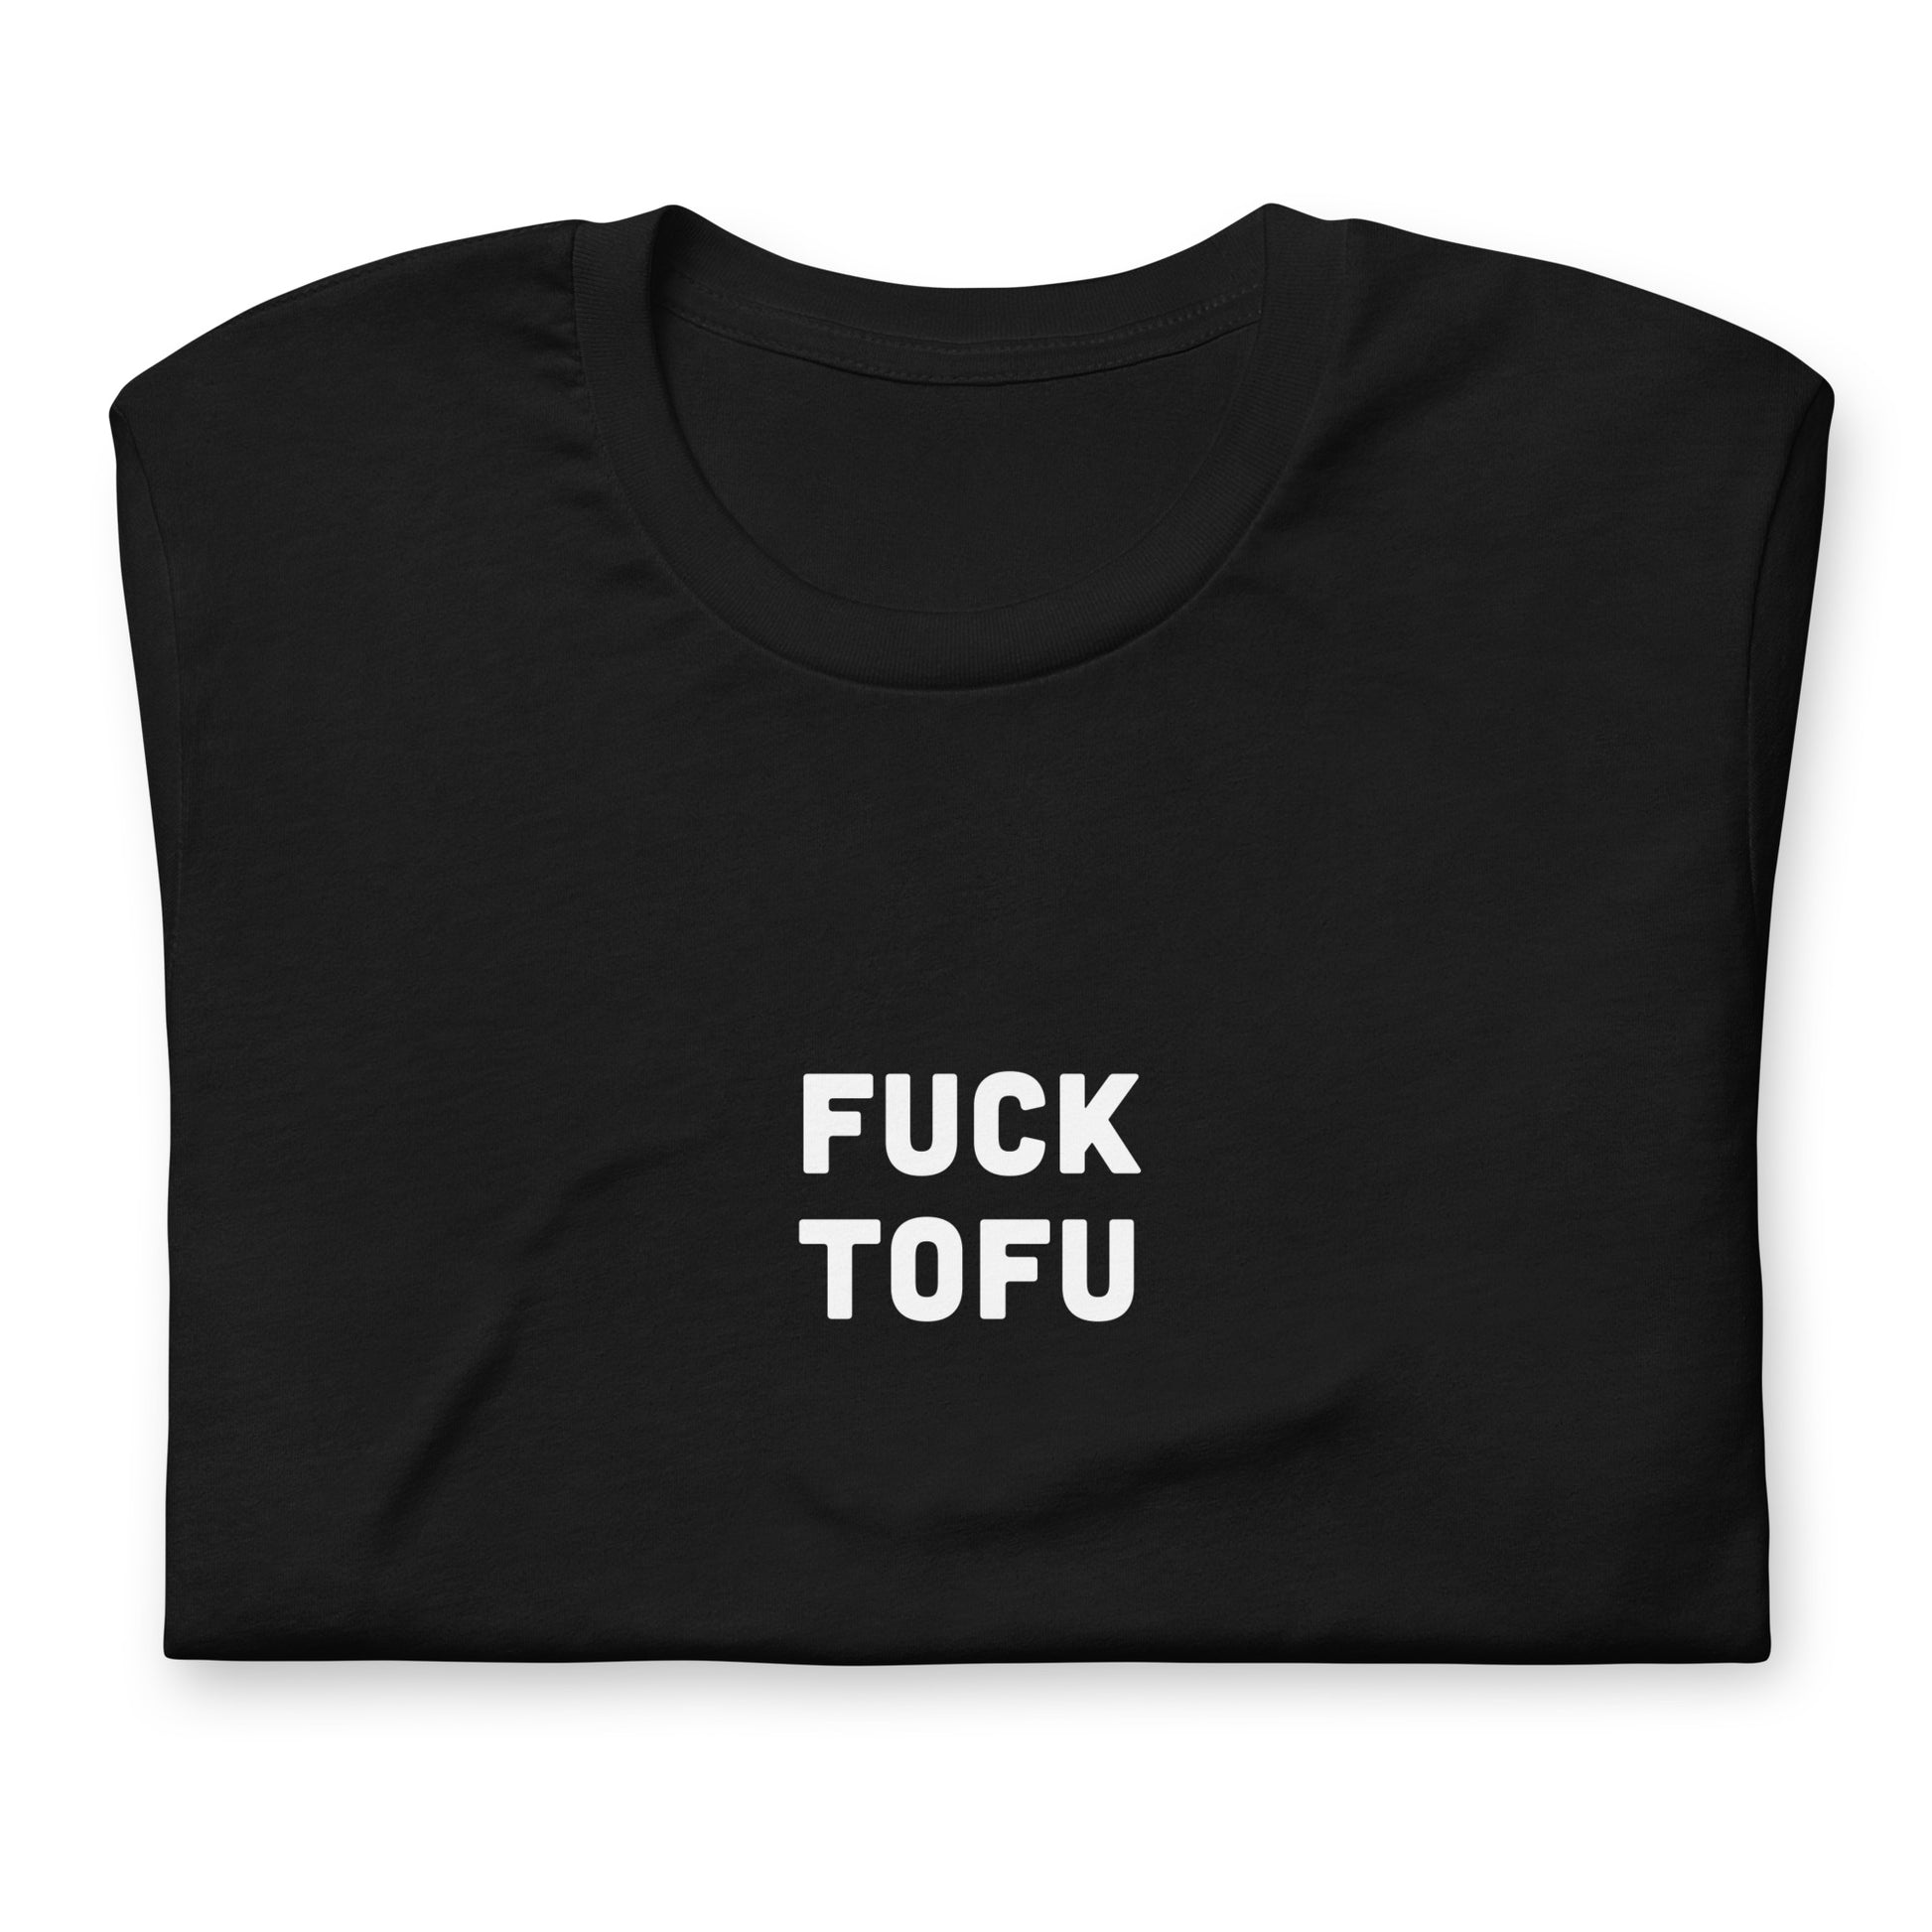 Fuck Tofu T-Shirt Size M Color Black